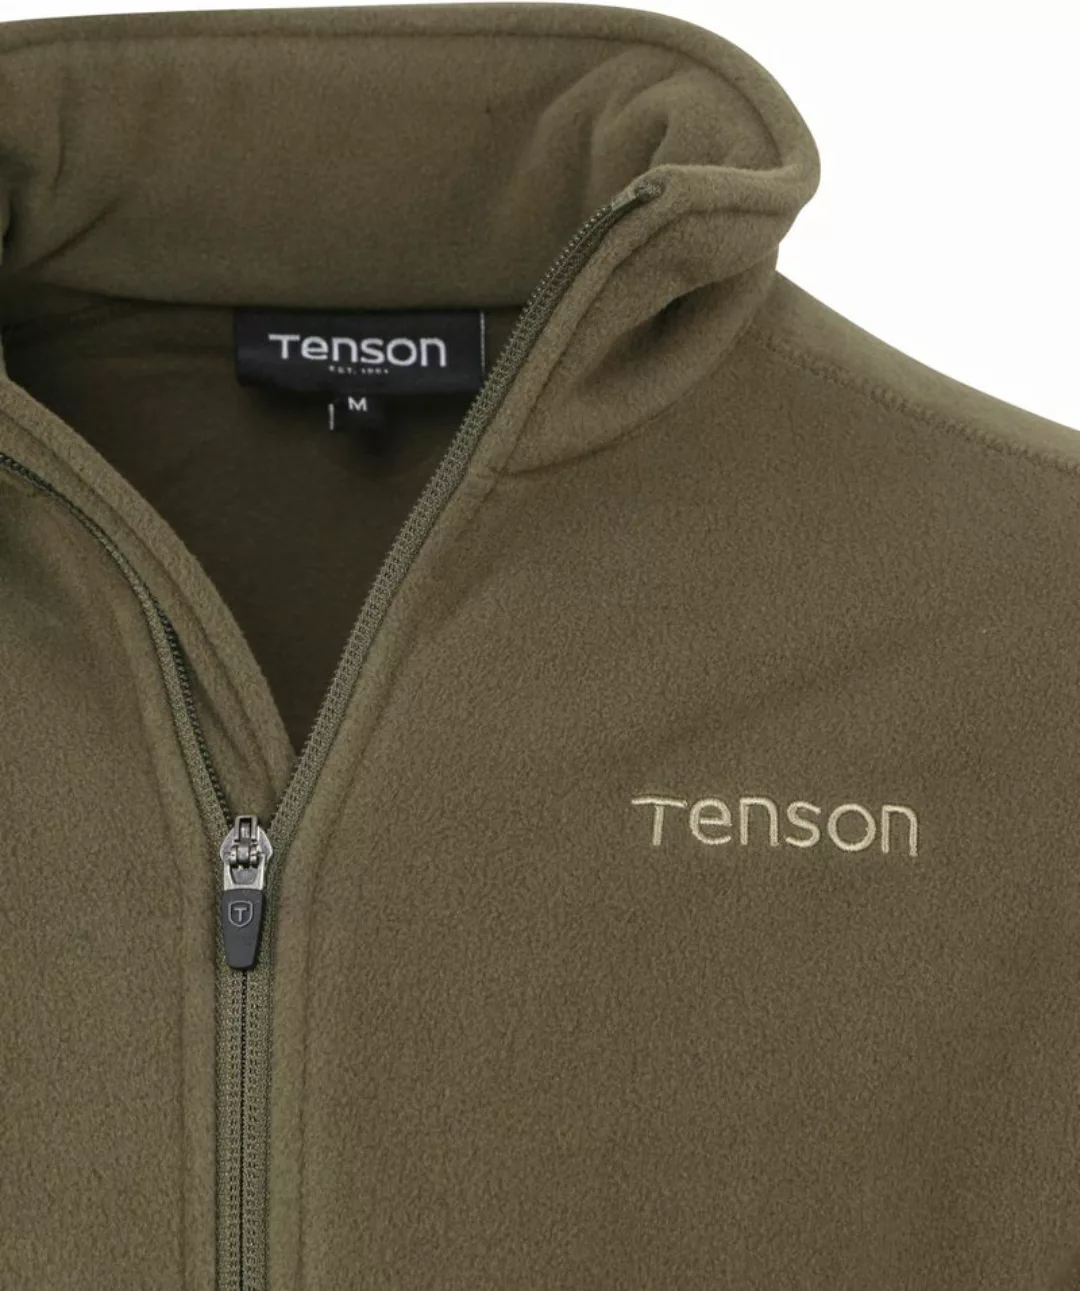 Tenson Miracle Fleece Jacke Olivgrün - Größe L günstig online kaufen